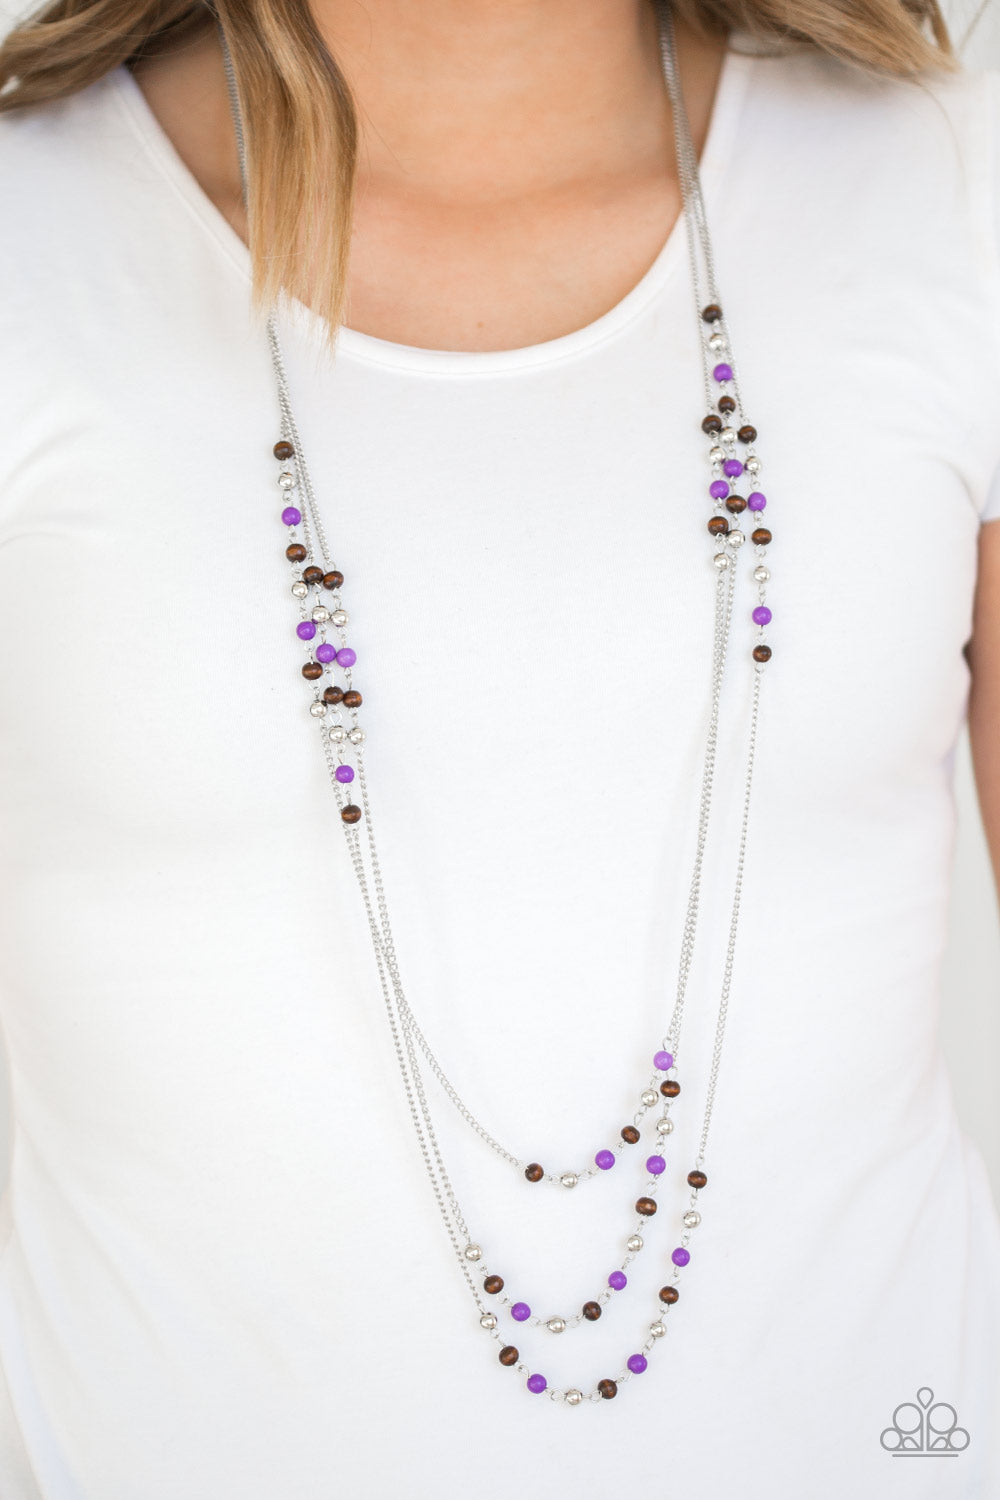 Seasonal Sensation - Purple necklace